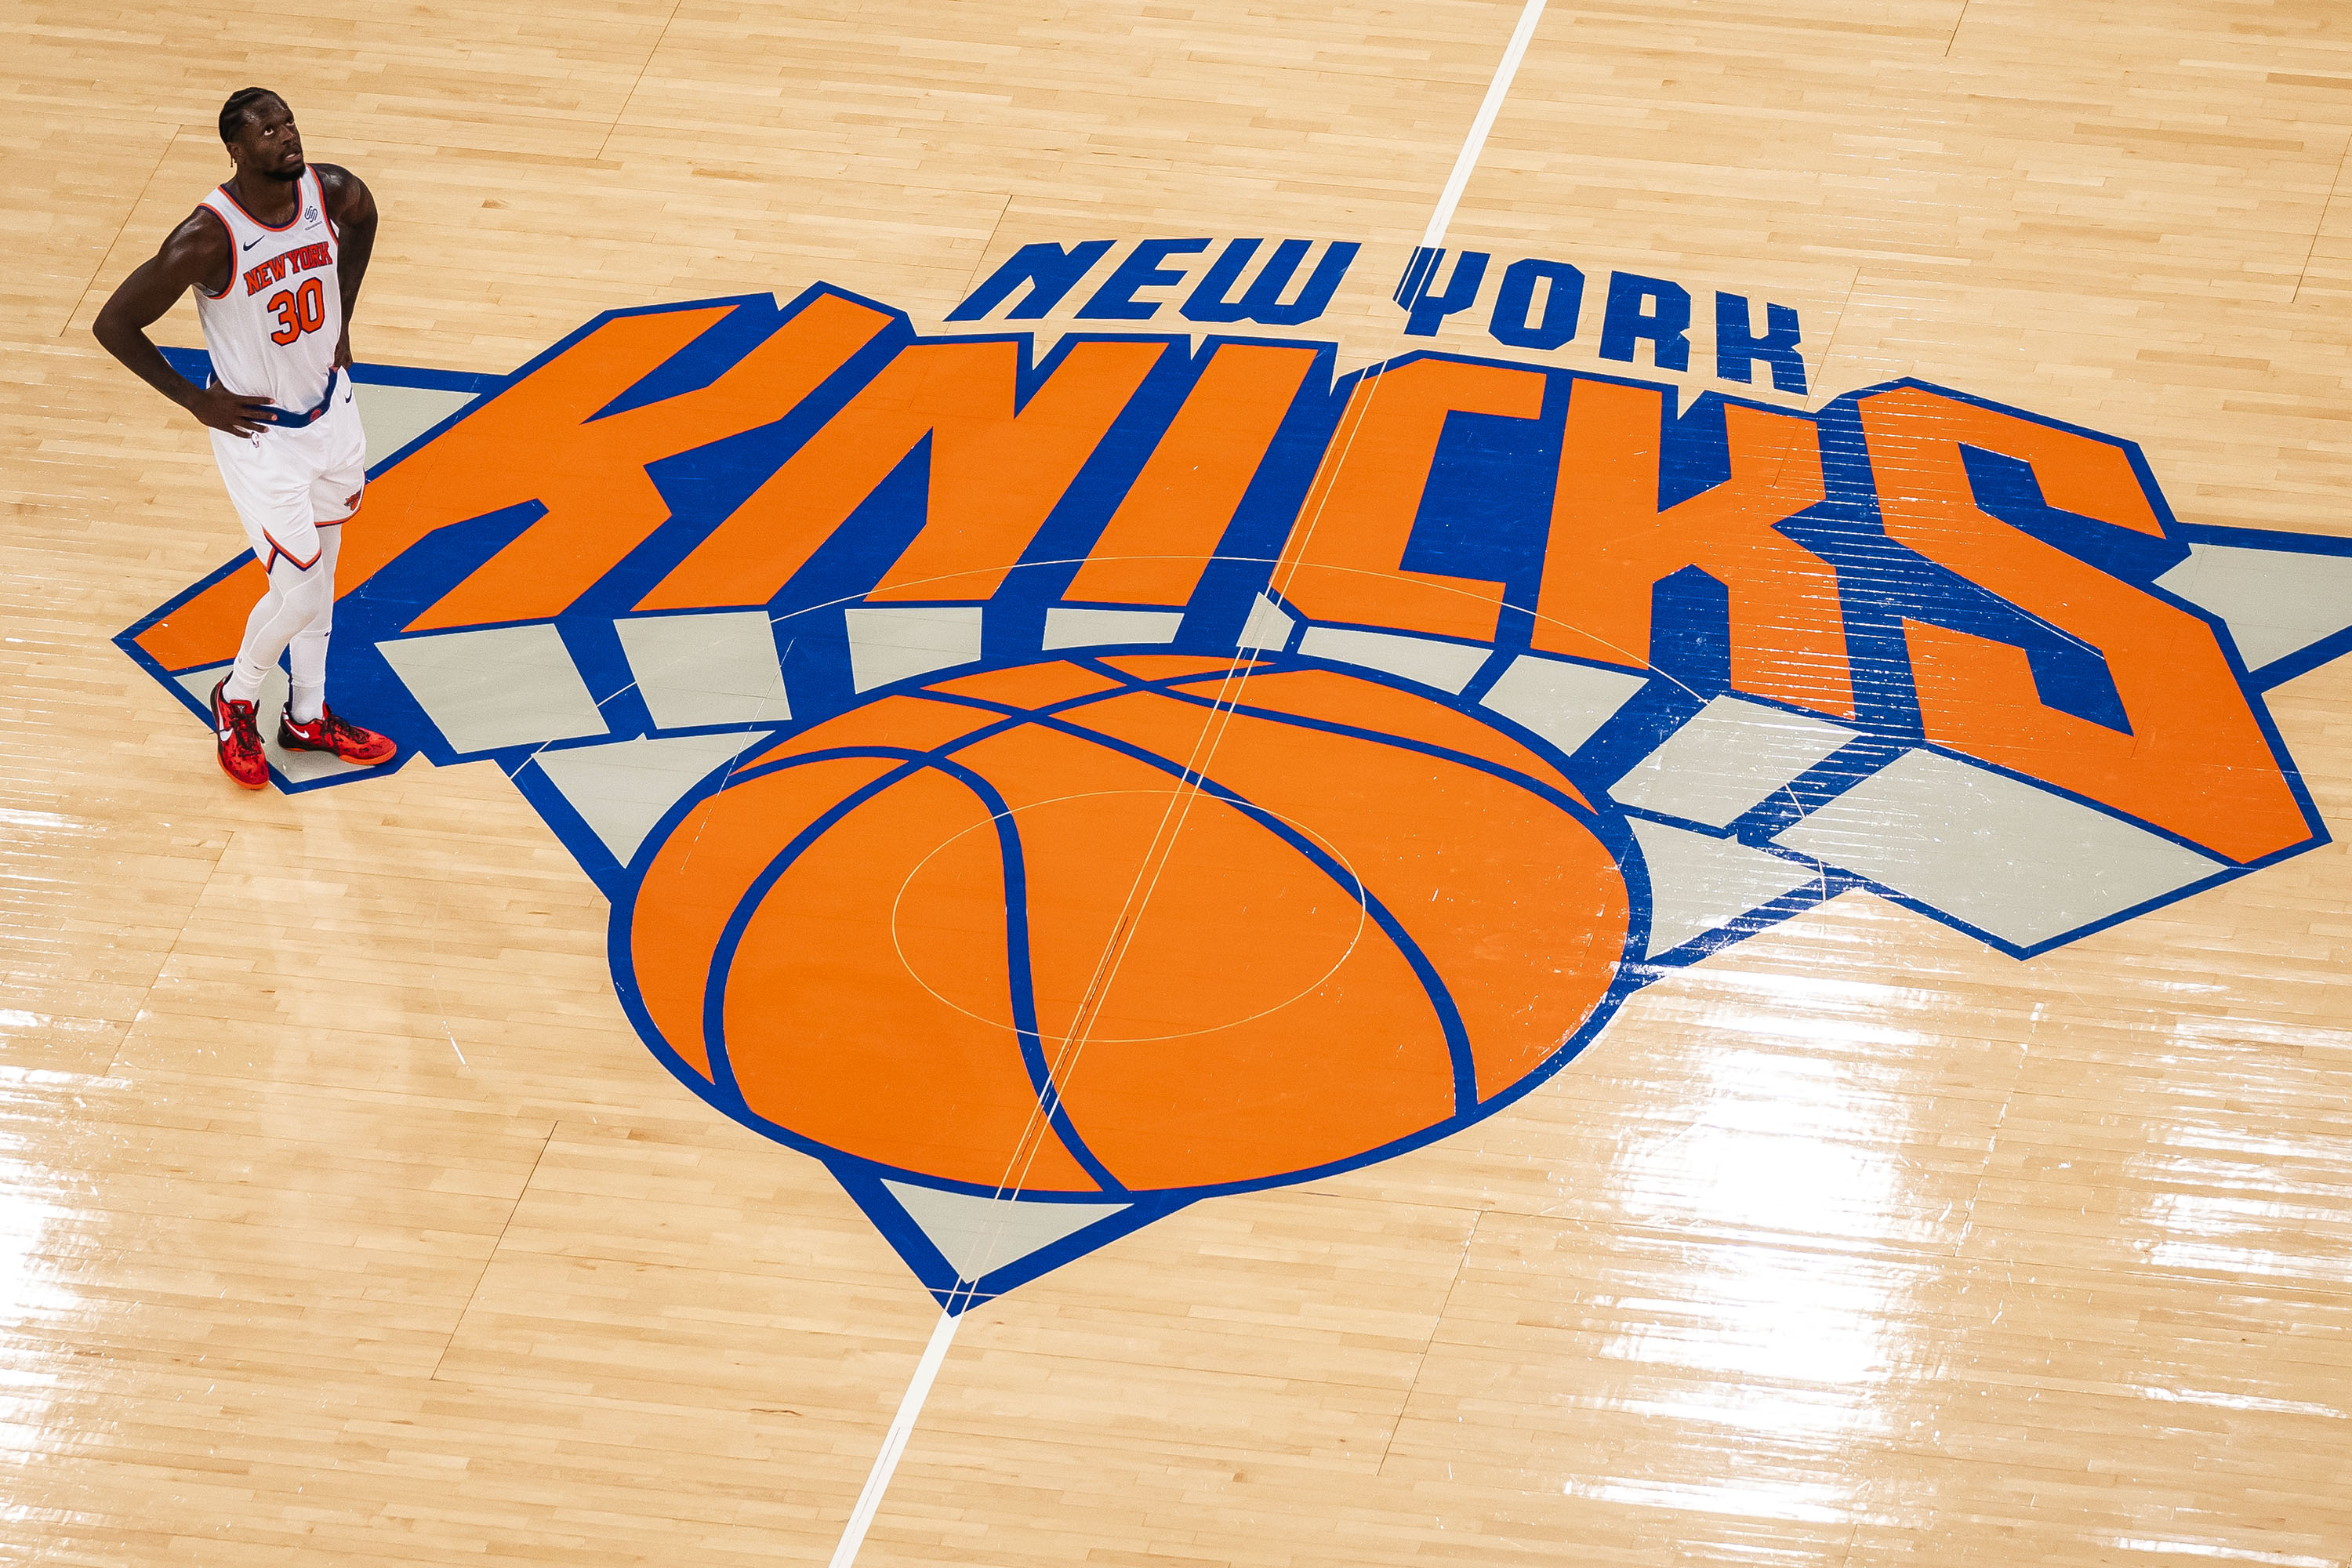 NYC Sports with New York Knicks Basketball